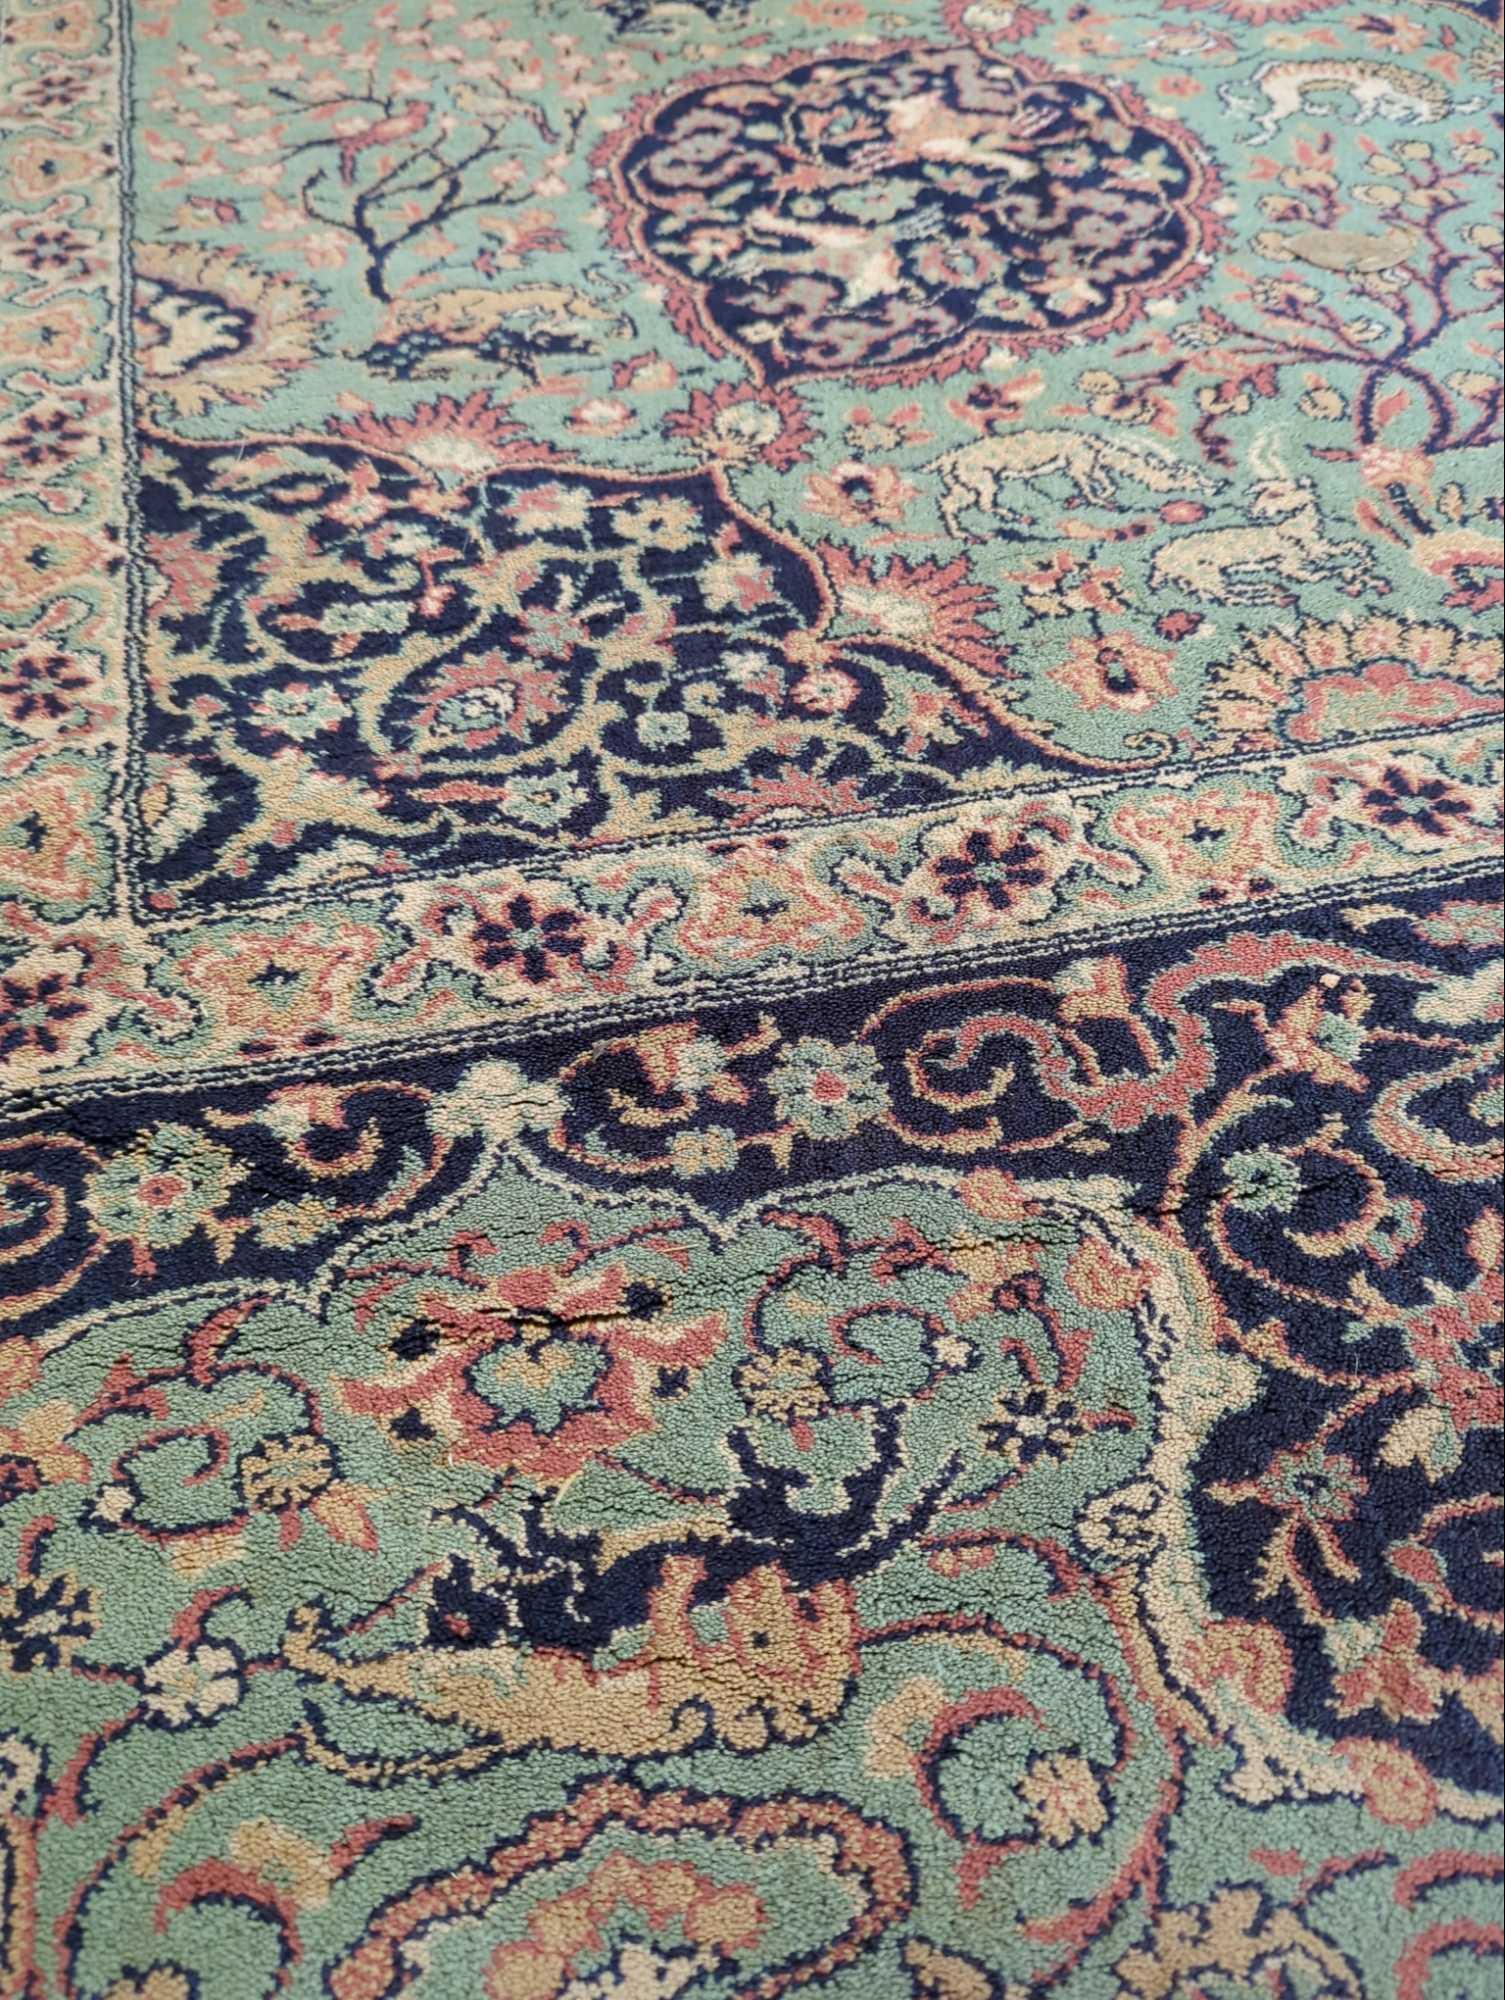 A Solomon Spun Acrylic Yarn carpet in the “Chelsea - Image 2 of 3